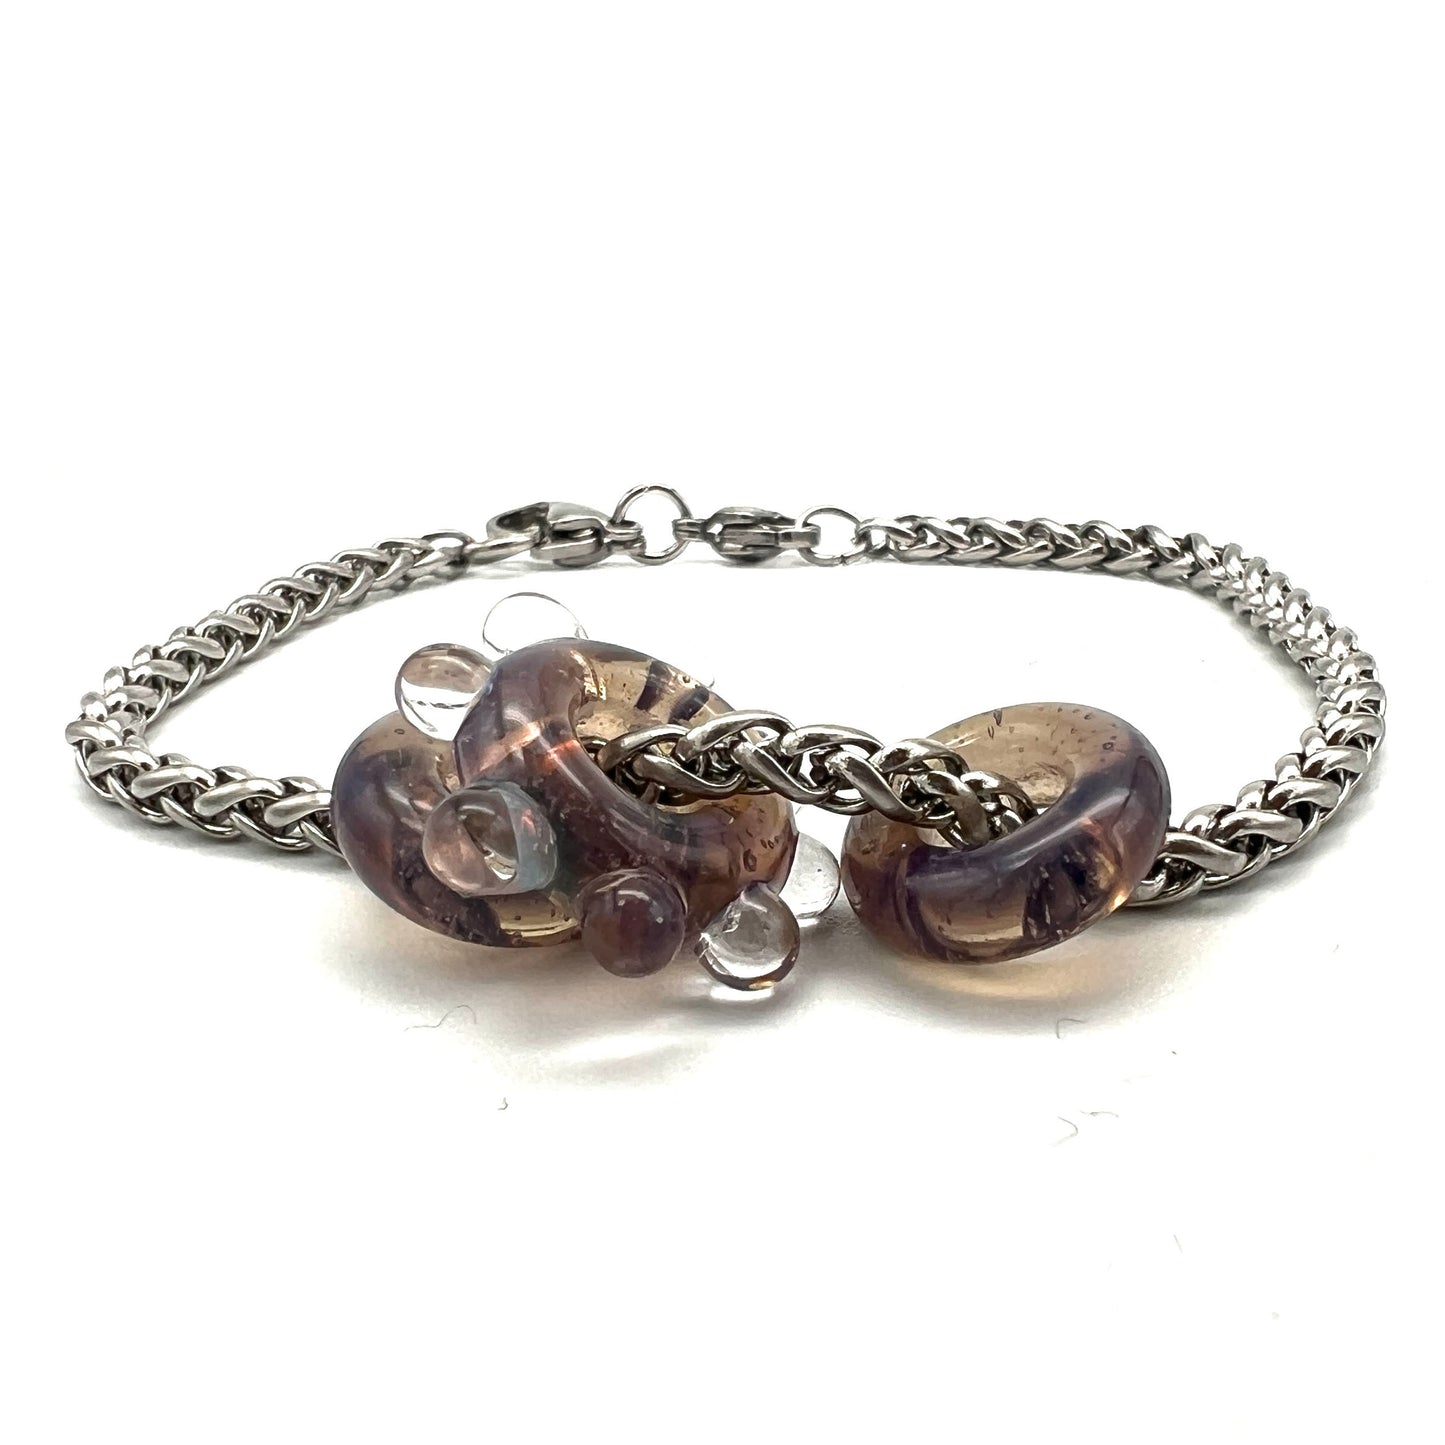 Bracelet with 3 purple iris water droplet glass beads